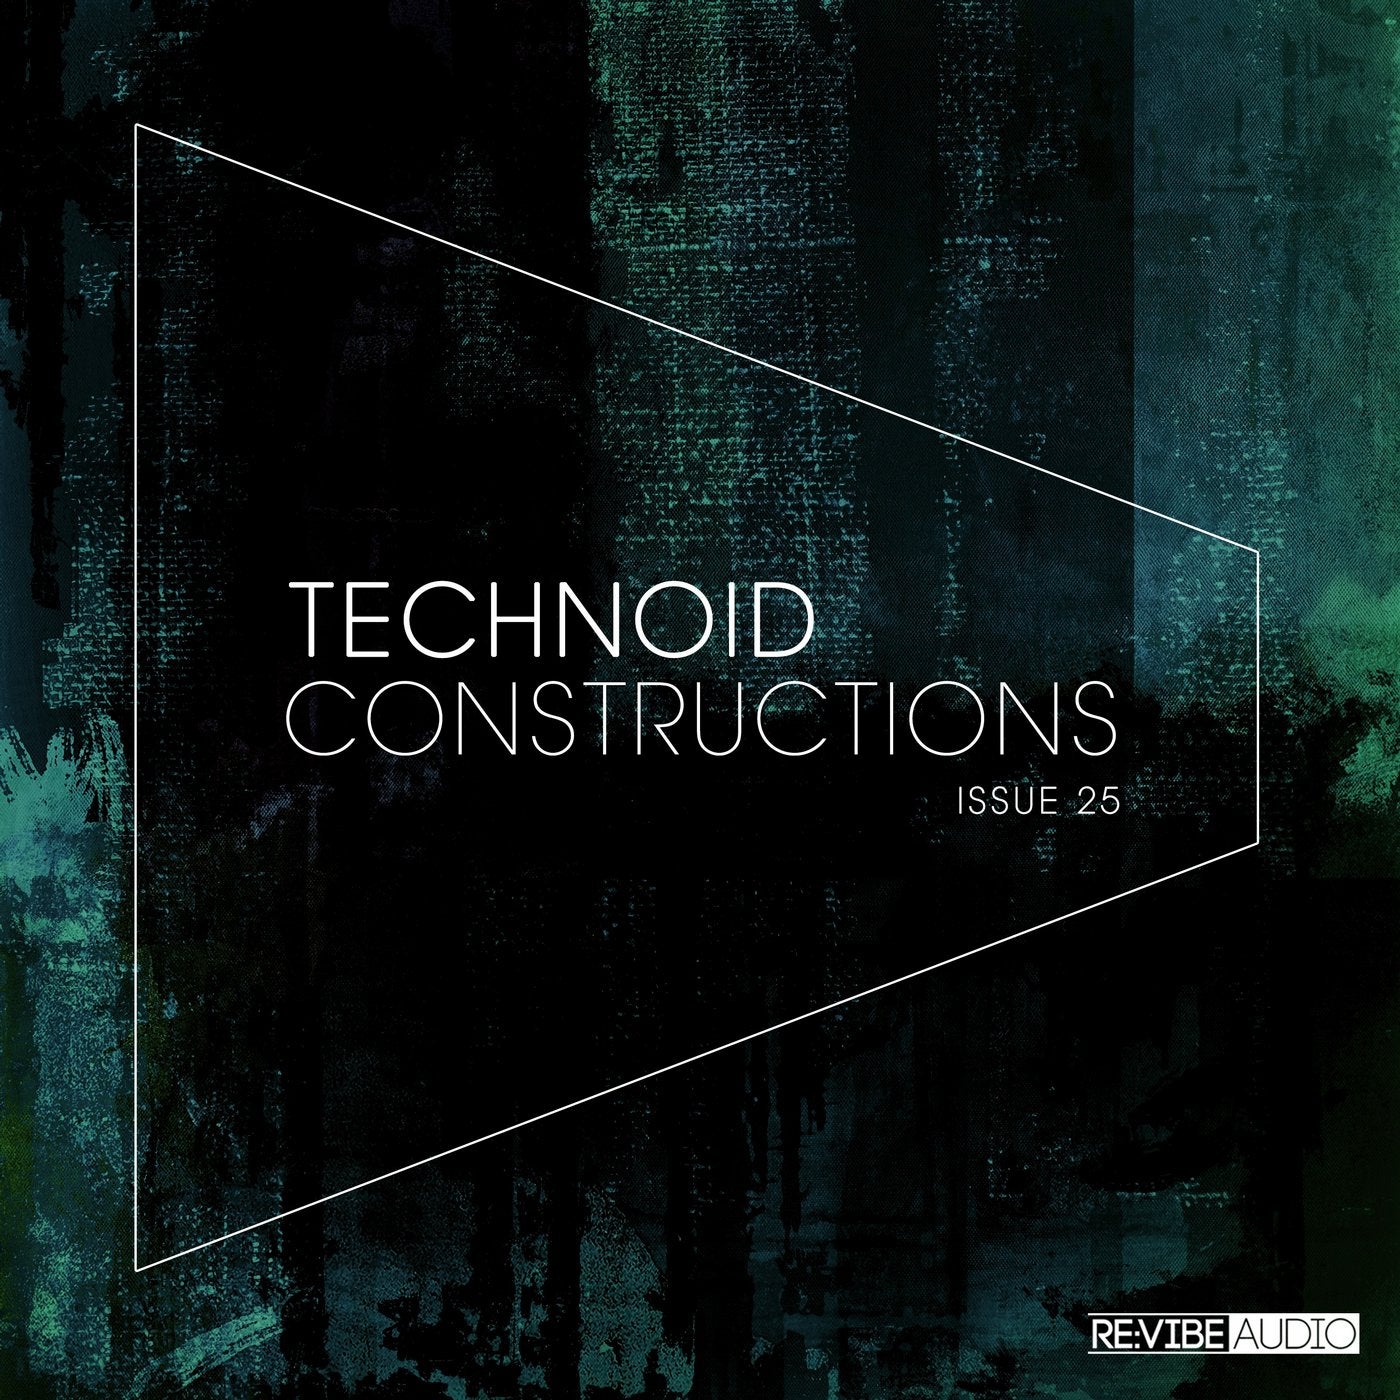 Technoid Constructions #25